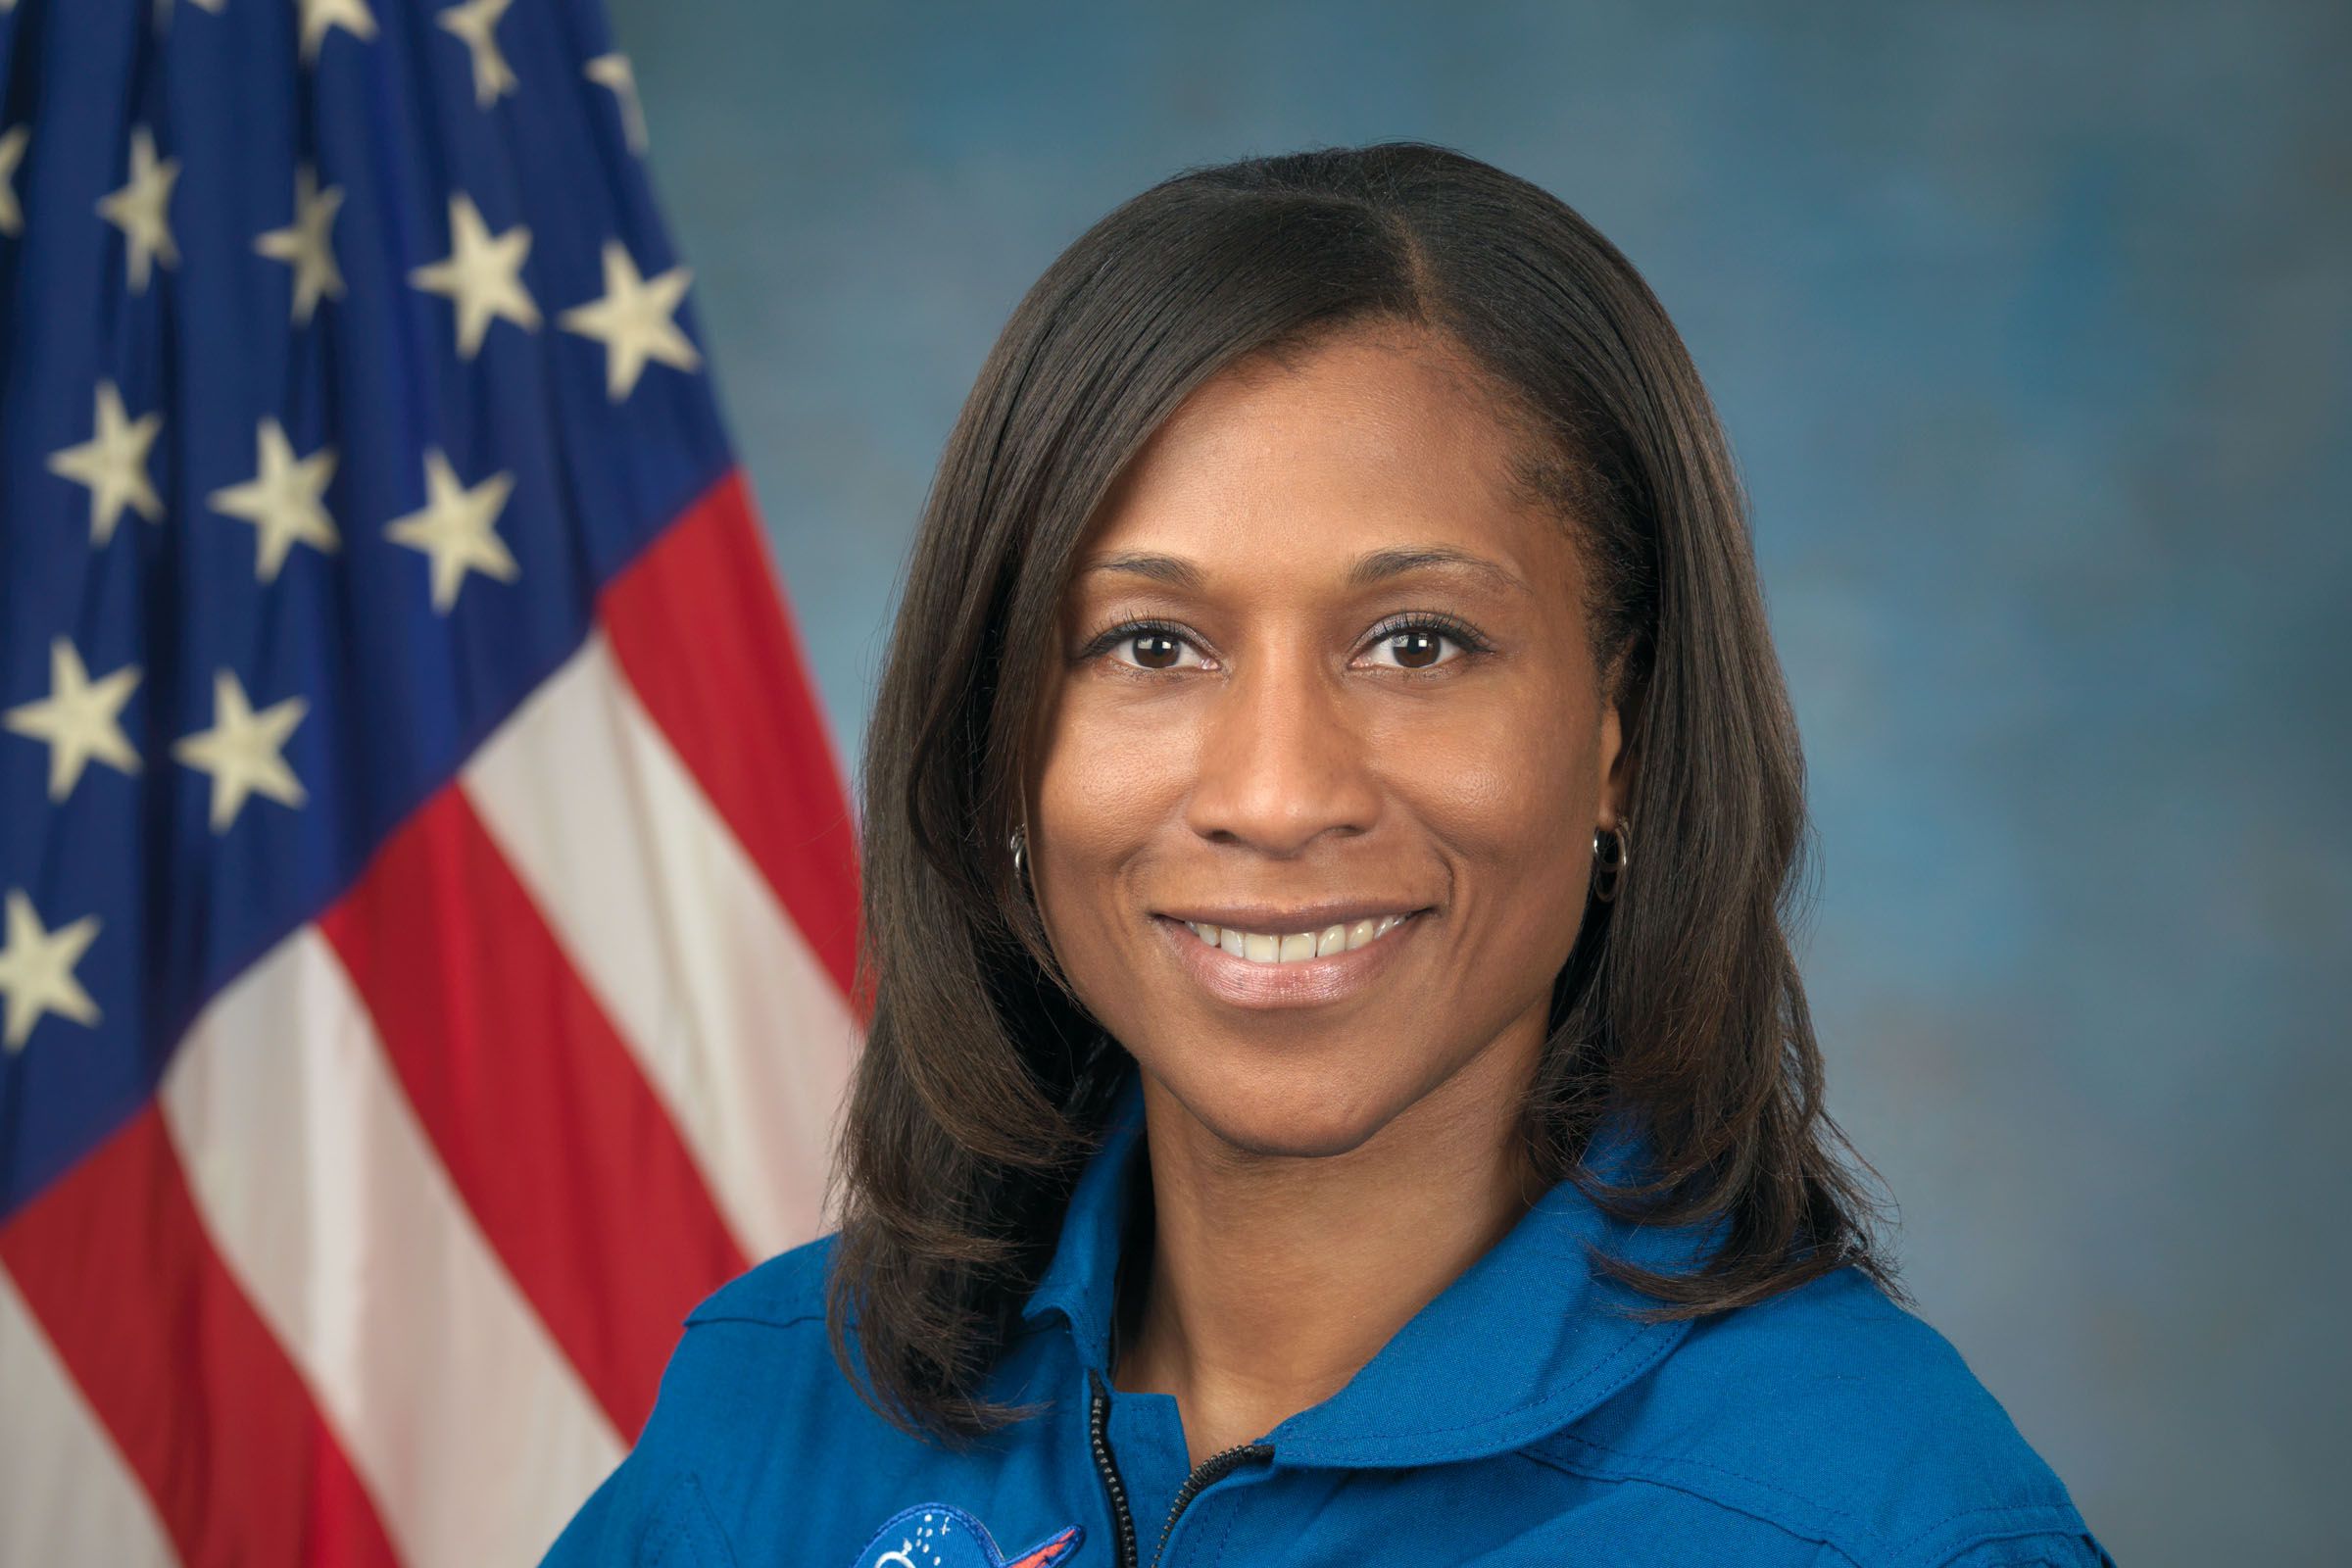 NASA astronaut Jeanette Epps